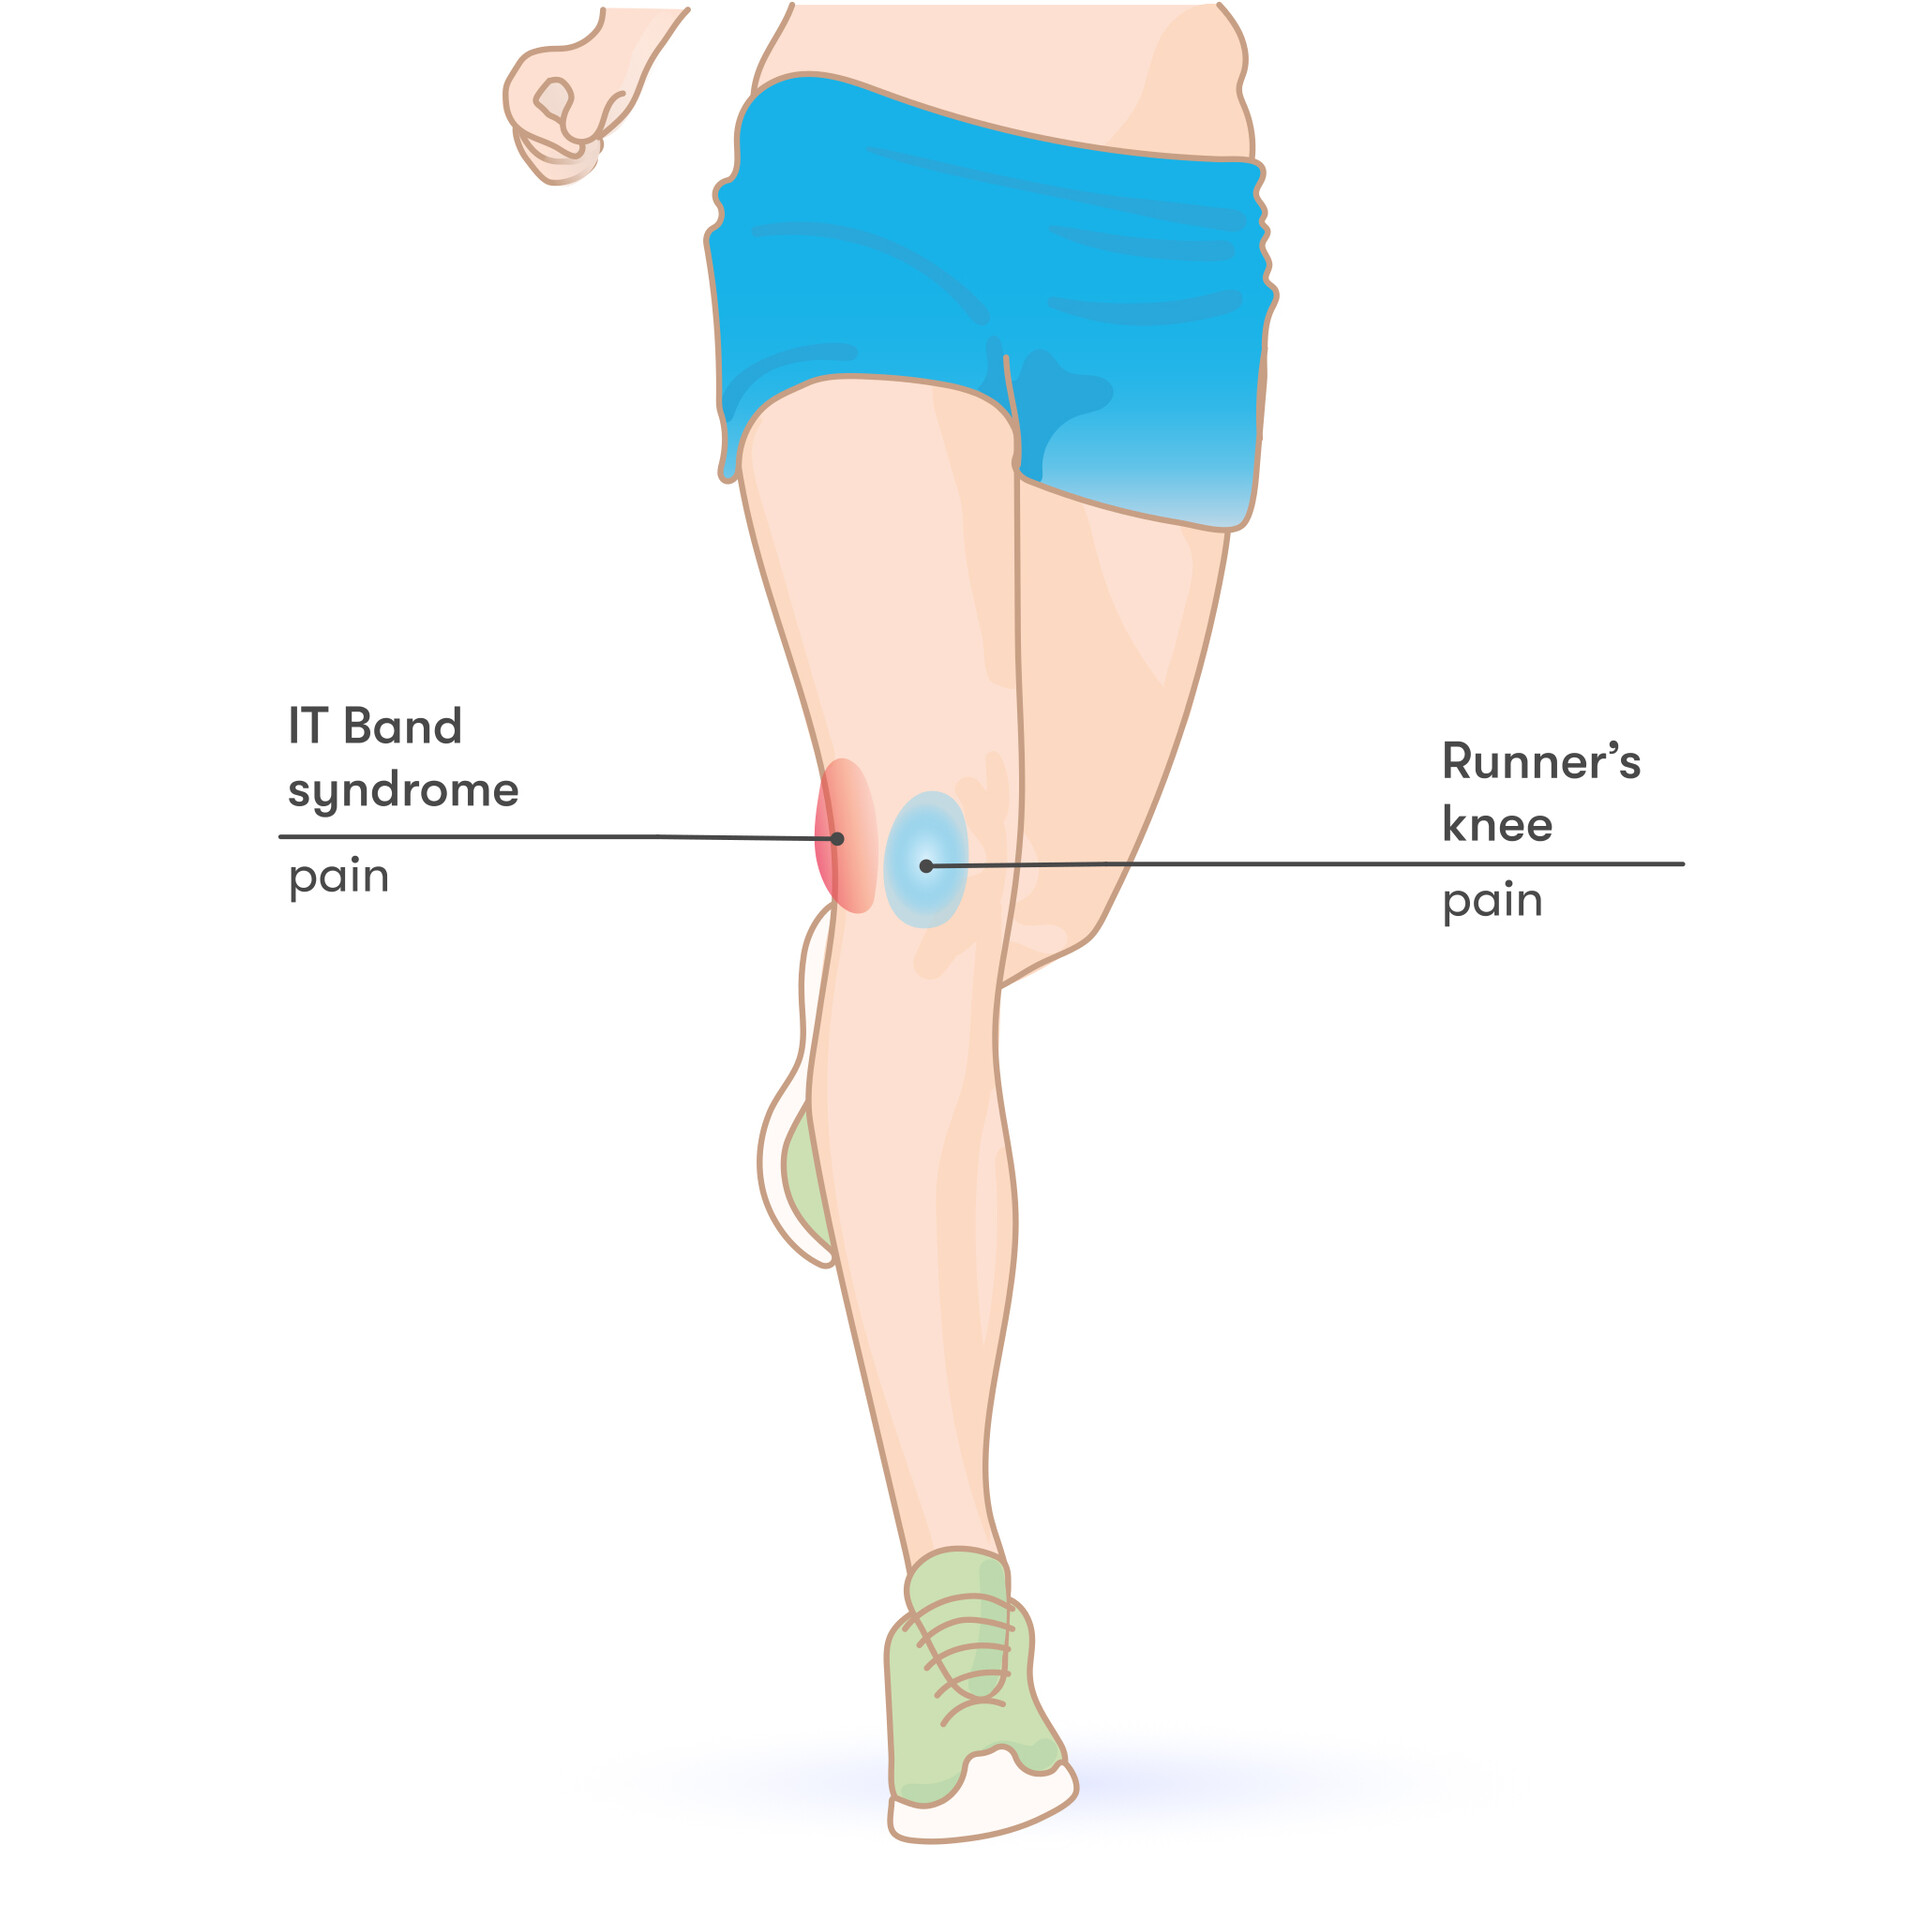 Iliotibial Band Syndrome (“Runner's Knee”)